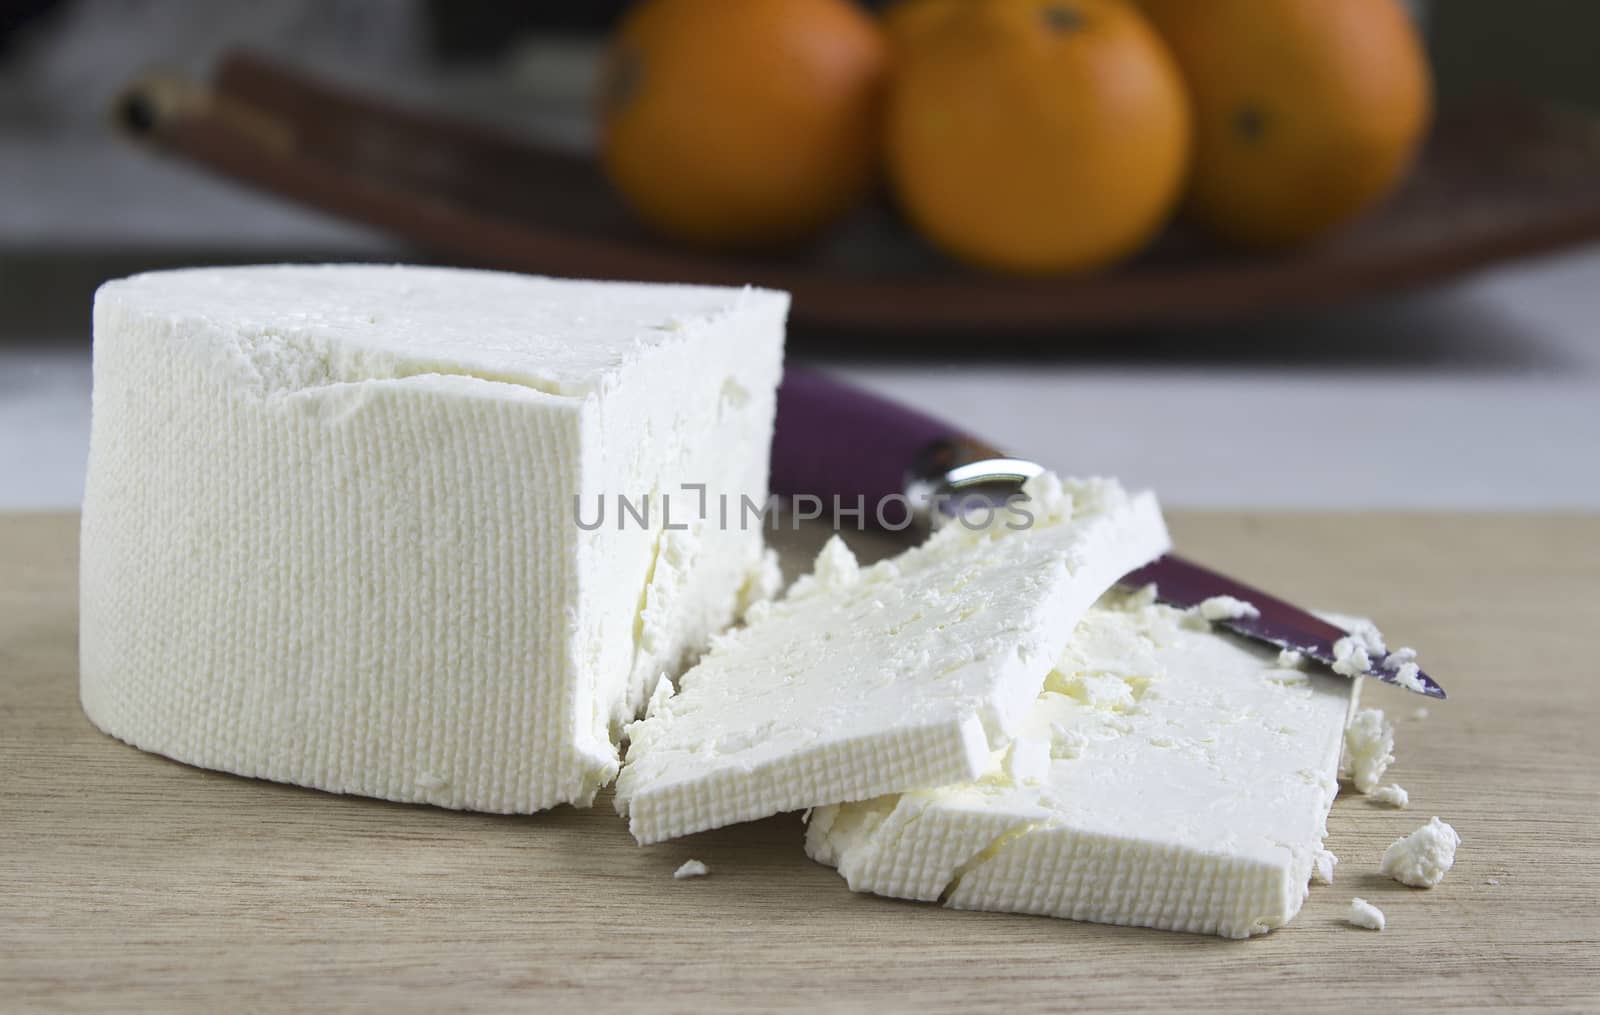 Feta cheese  on a wooden cutting board